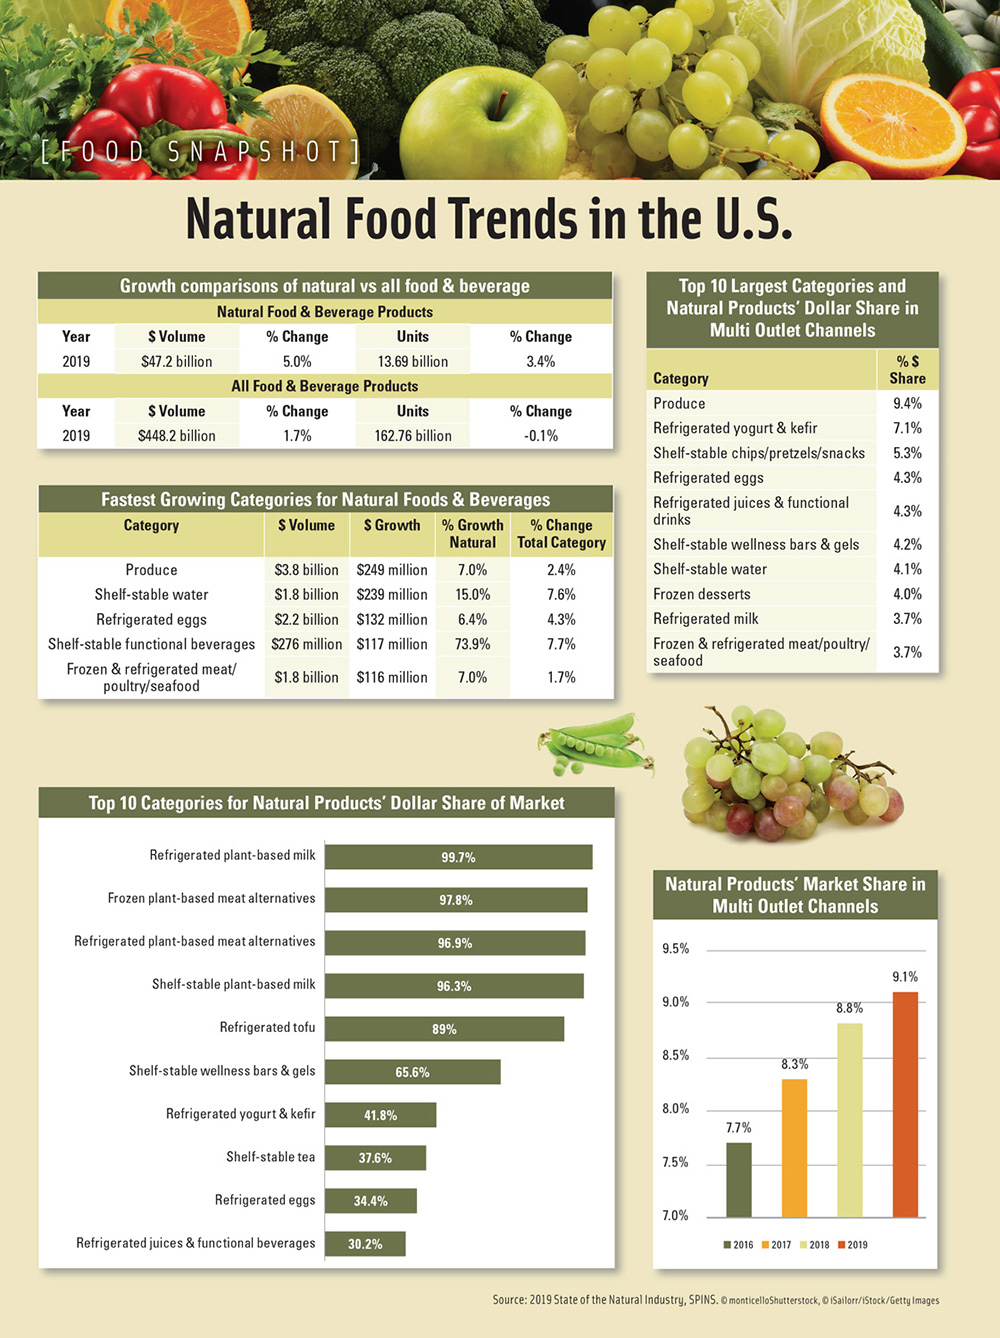 Food Snapshot Natural Food Trends in the U.S.